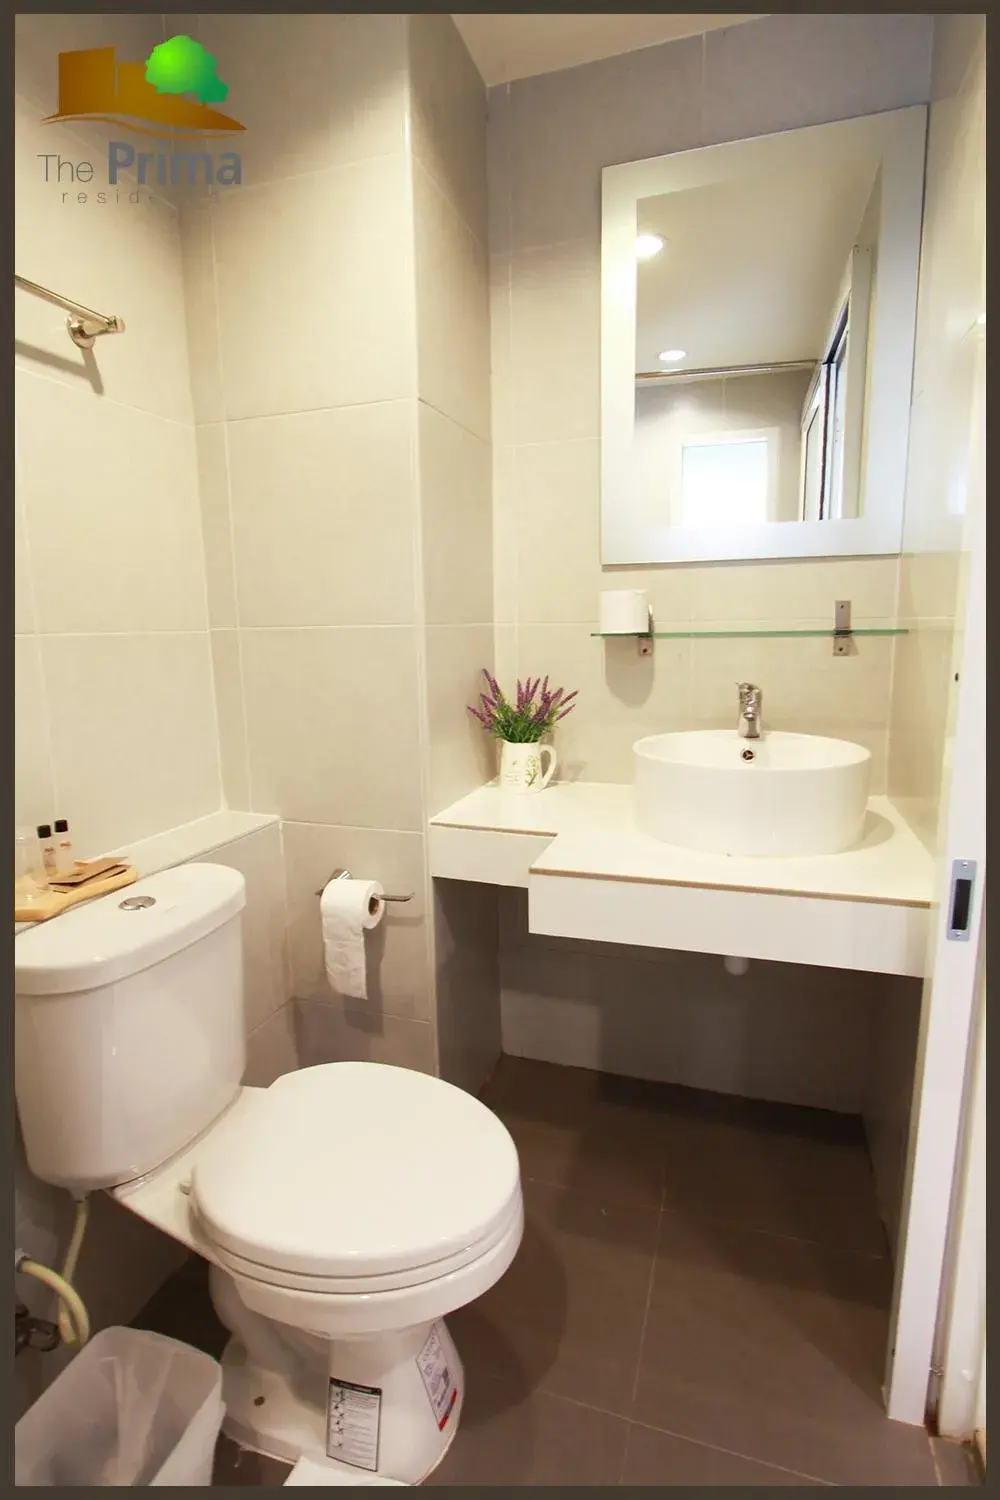 Bathroom in The Prima Residence - SHA Certificate